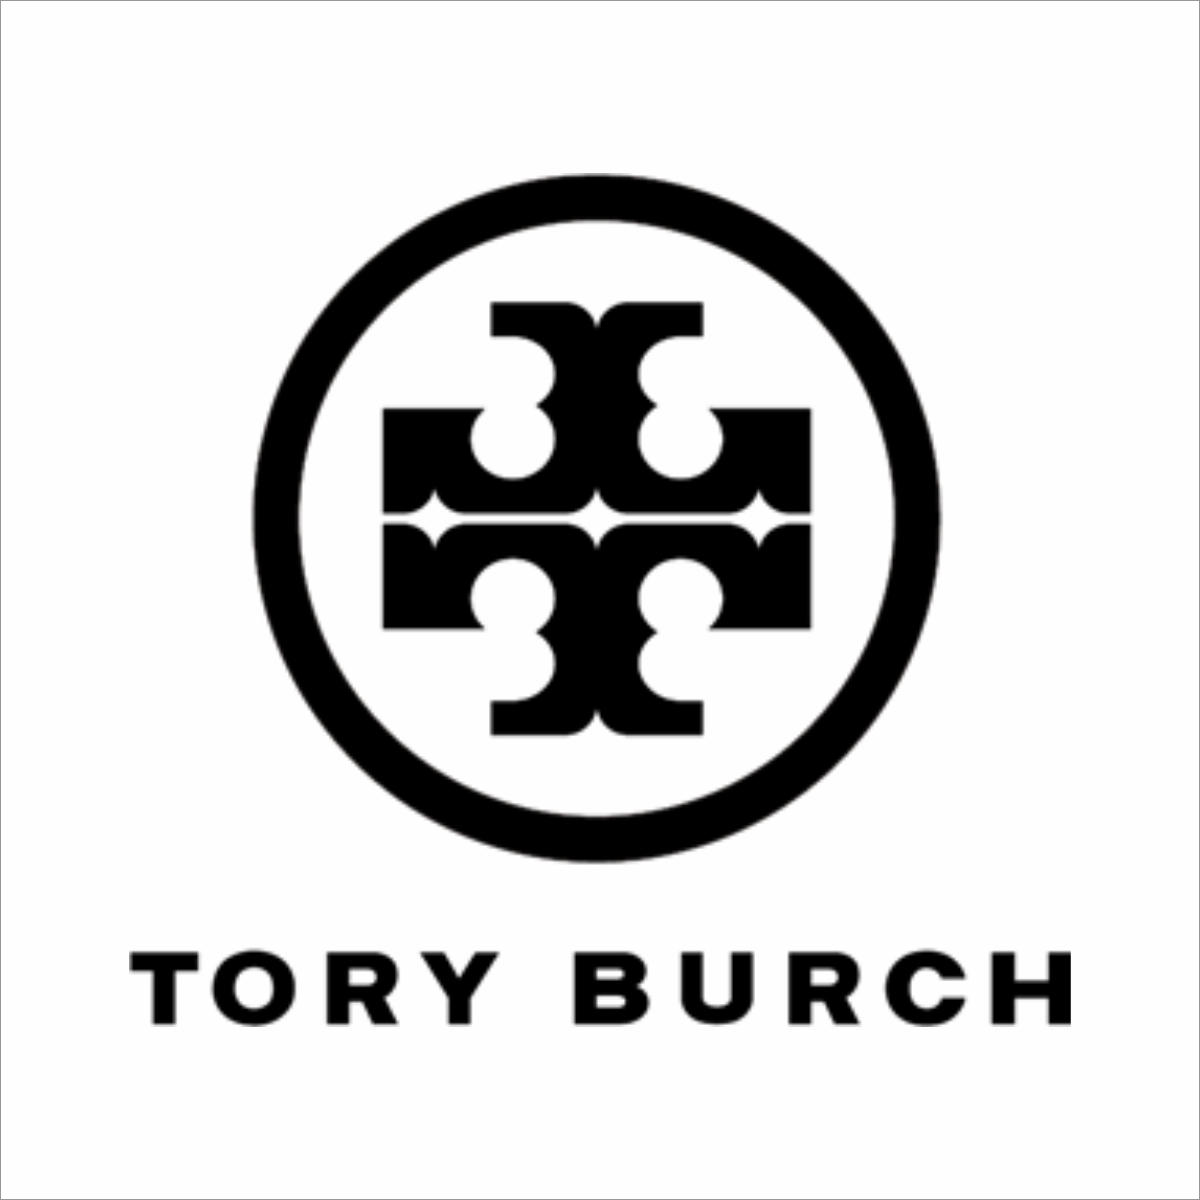 Tory Burch - O'Rourke Sales Company